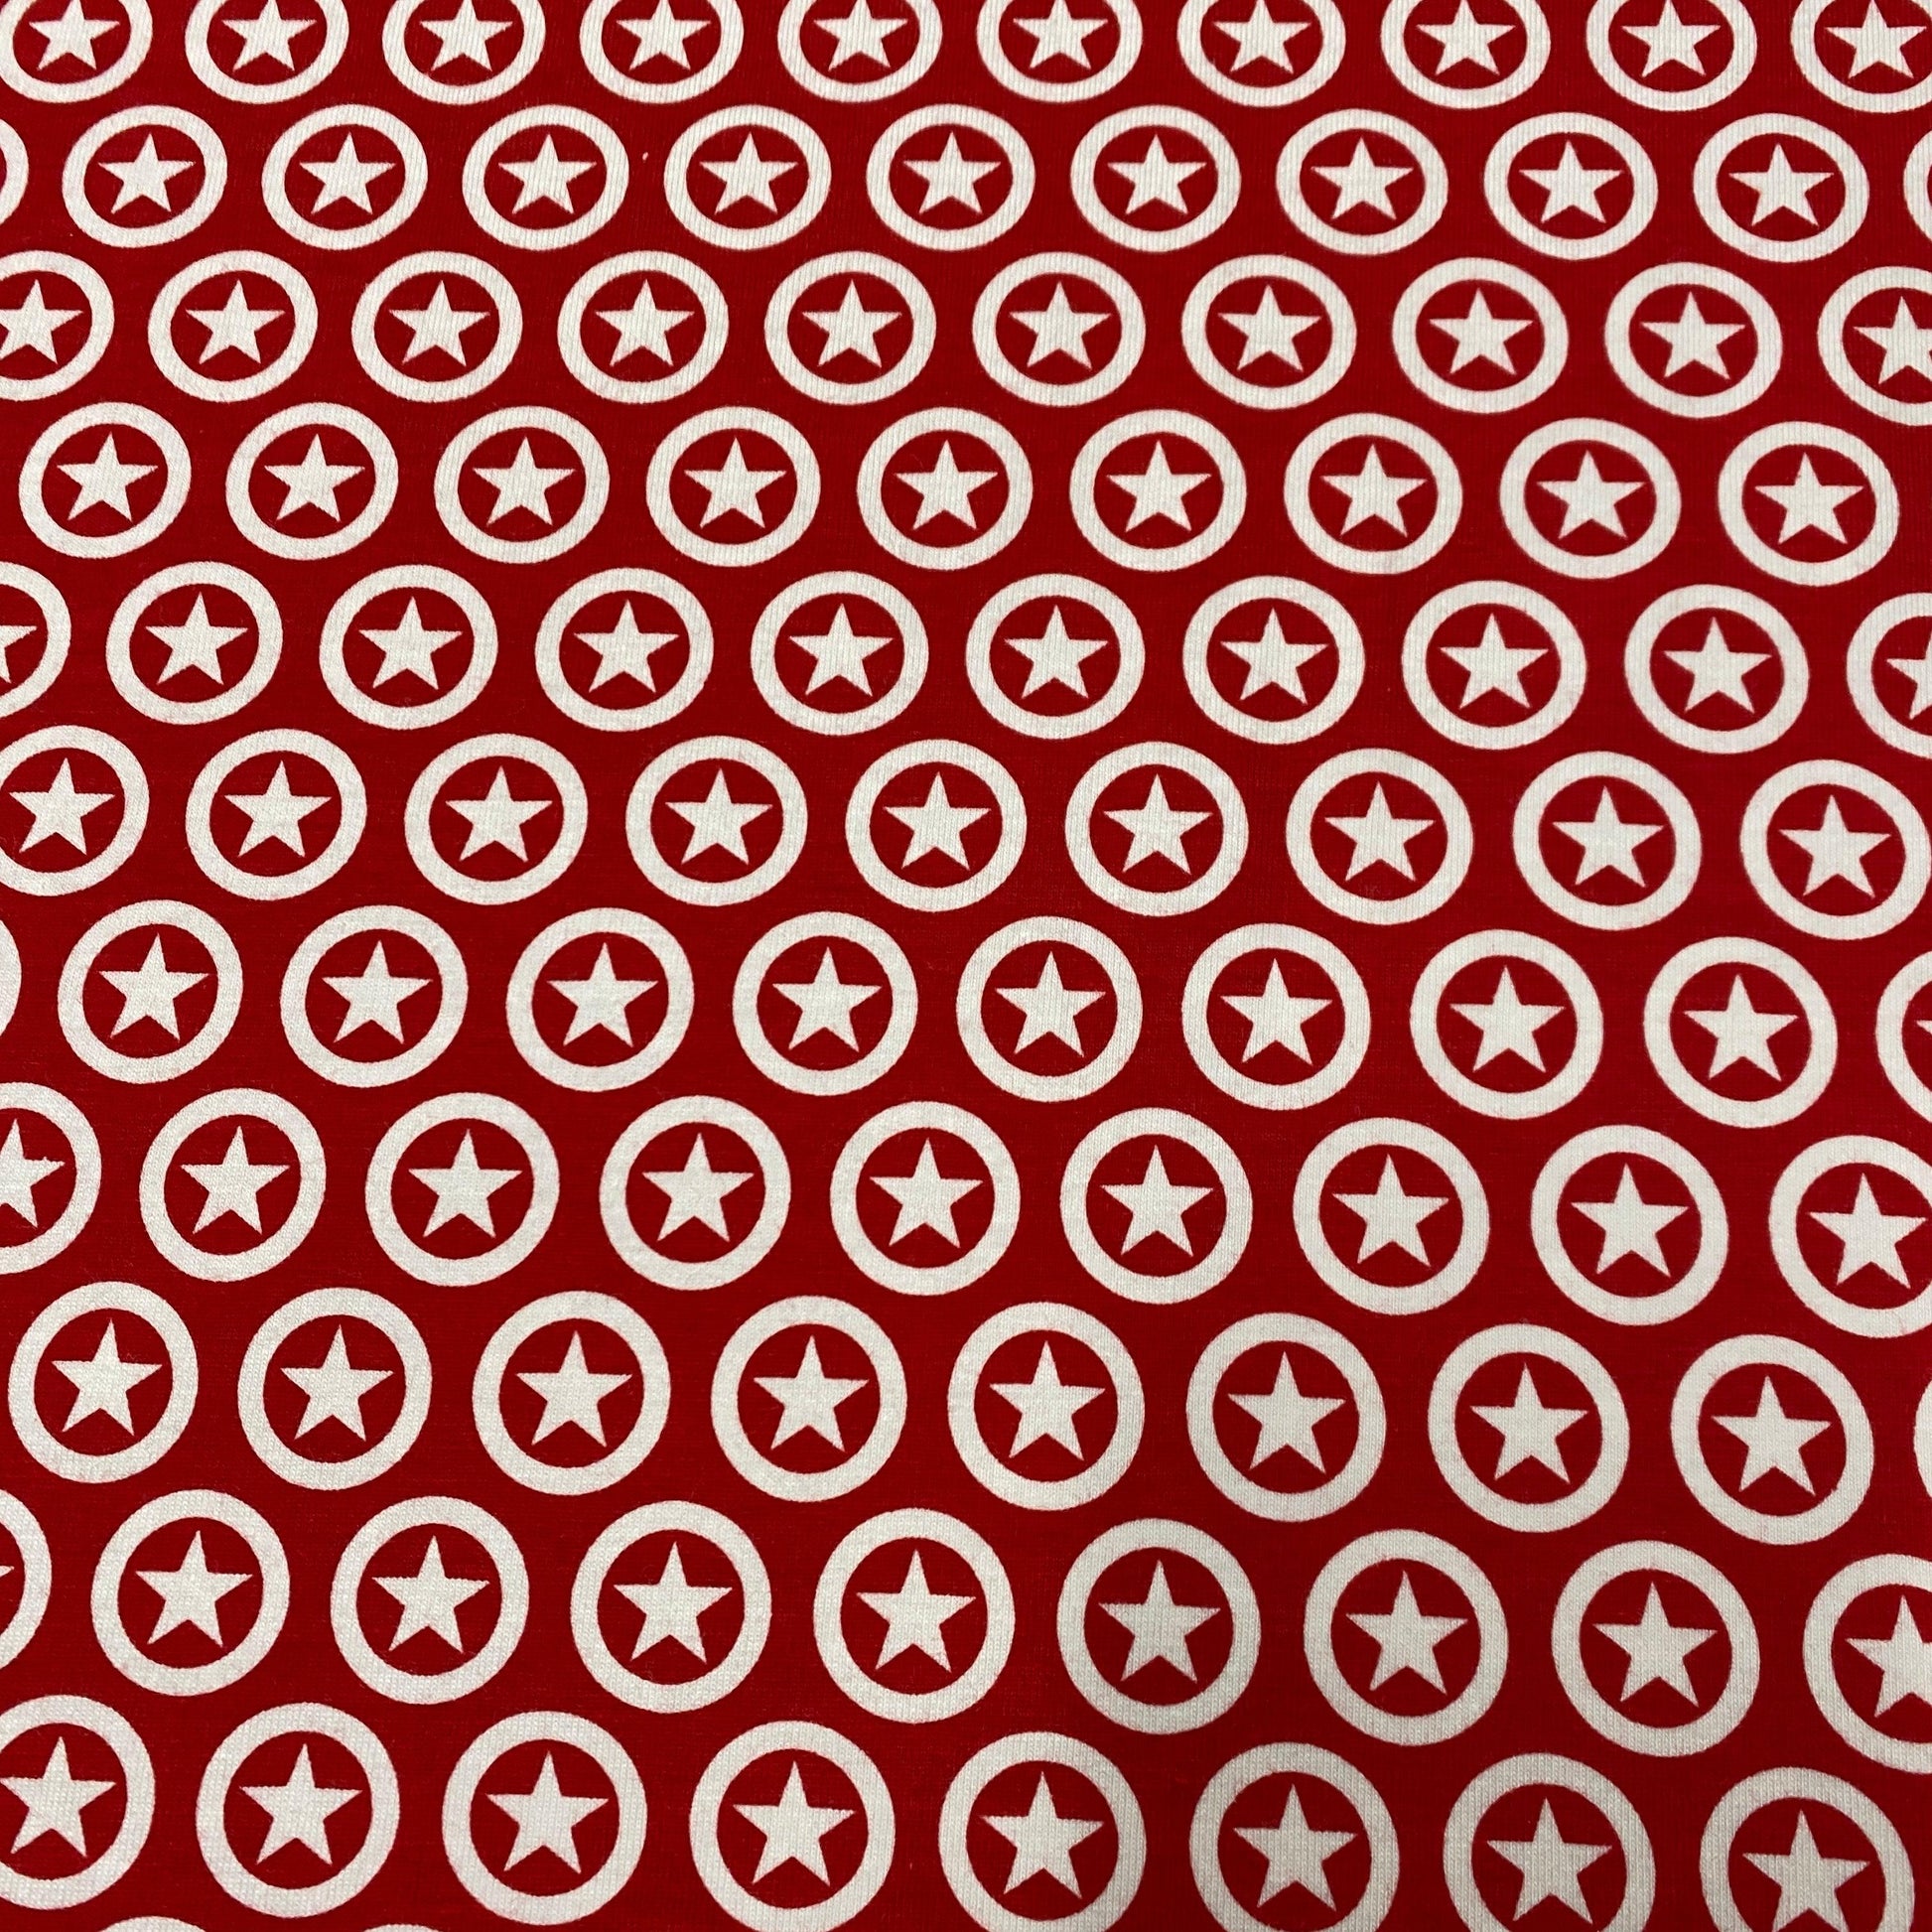 Star Circle on Cream Cotton/Spandex Jersey Fabric - Nature's Fabrics